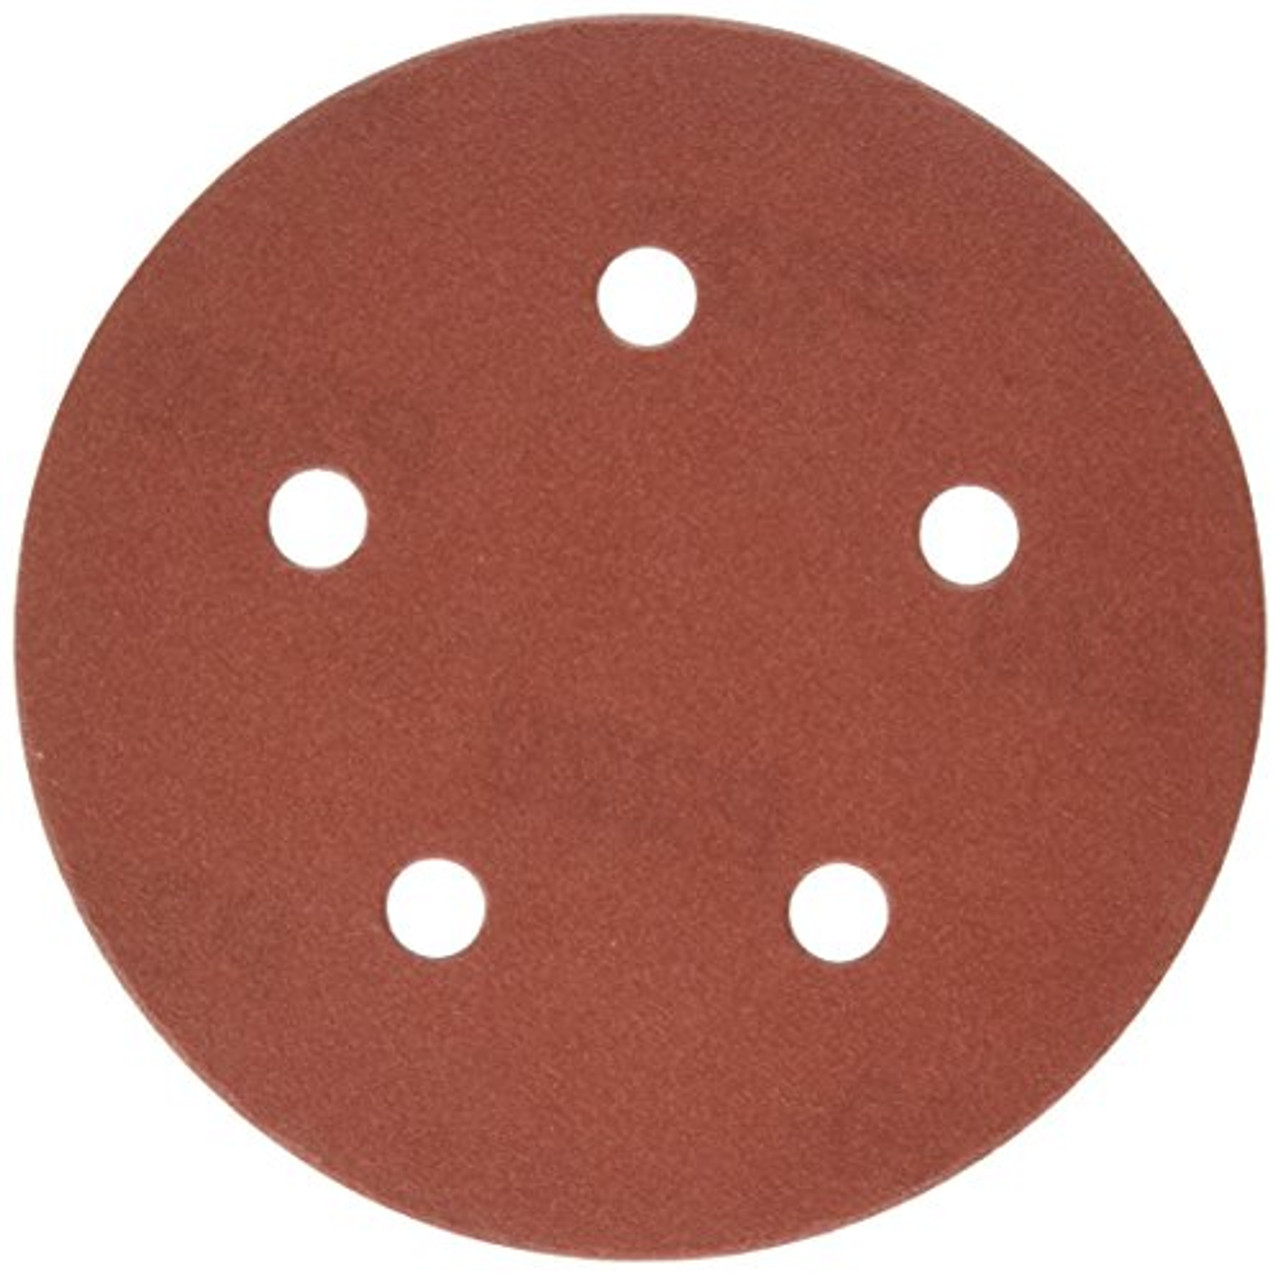 PORTER-CABLE (735502205) 5-Inch 220 Grit Five-Hole Hook & Loop Sanding Discs (1-Pk/5-Discs)